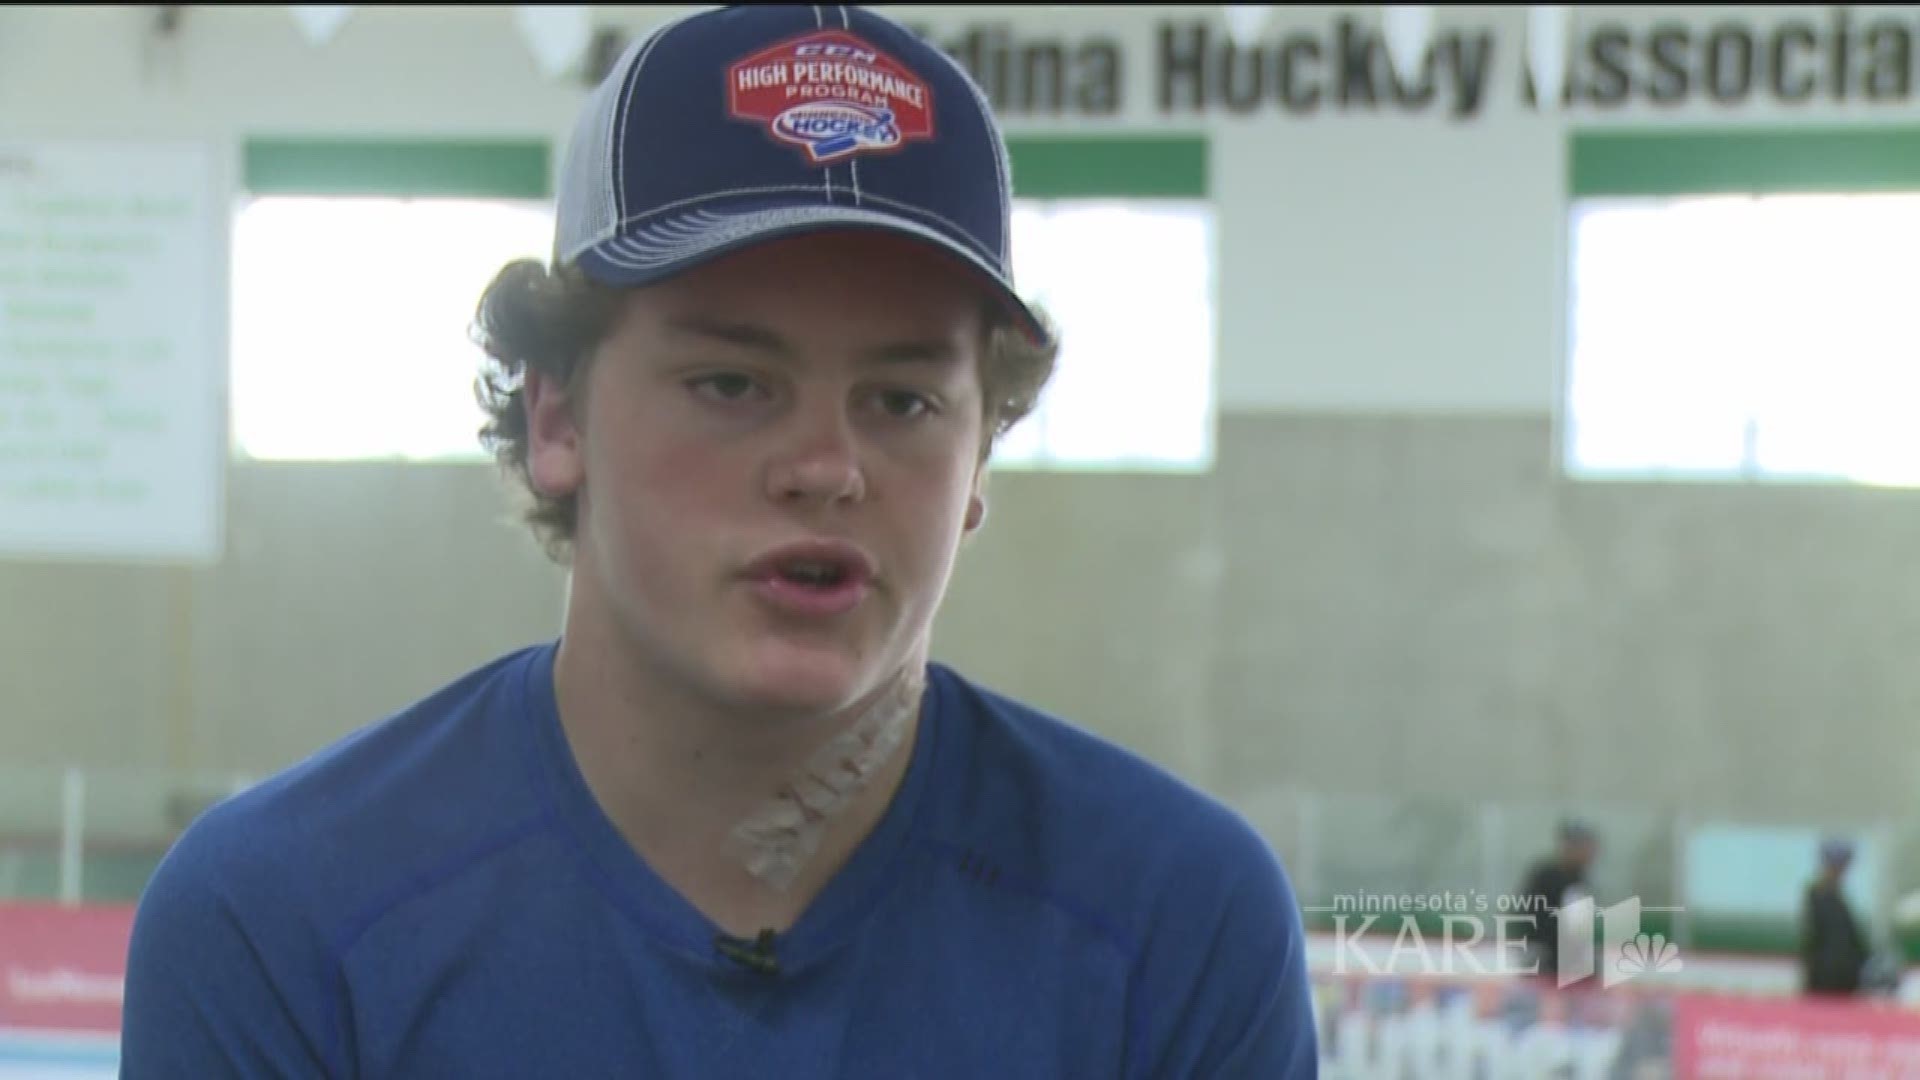 MN teen's jugular vein cut during hockey practice